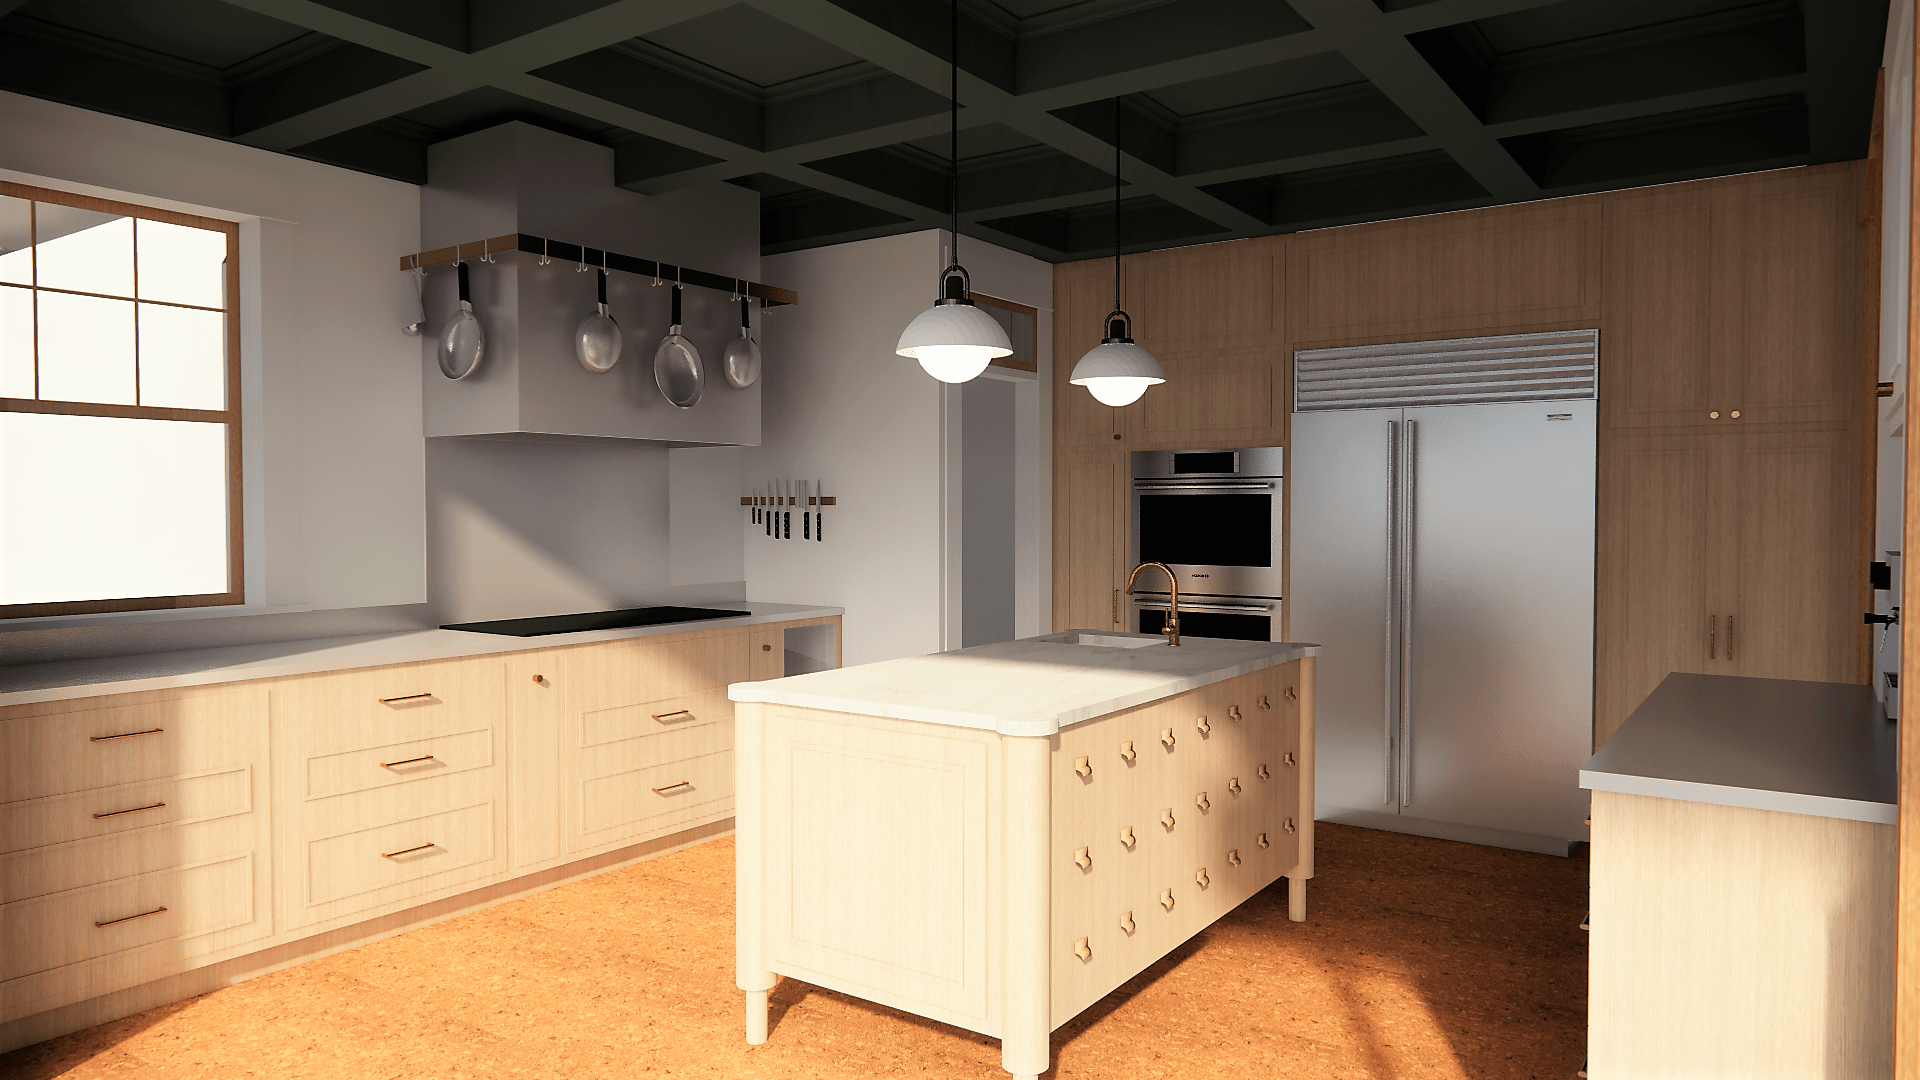 Rendering of in progress kitchen home remodel interior design island and fridge